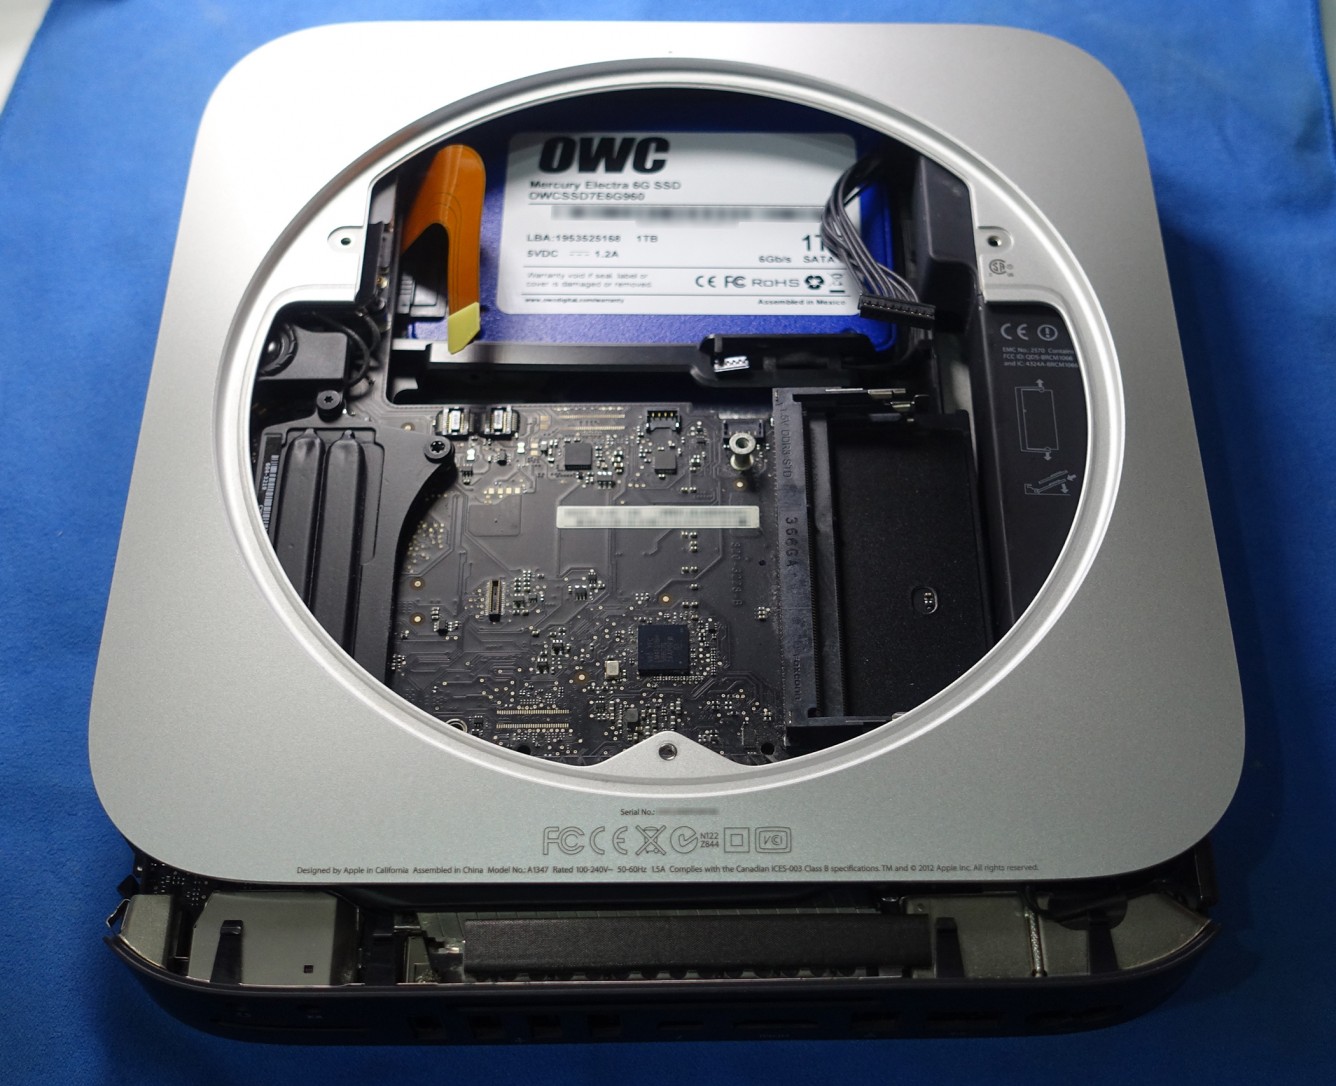 clone mac mini hard drive to ssd